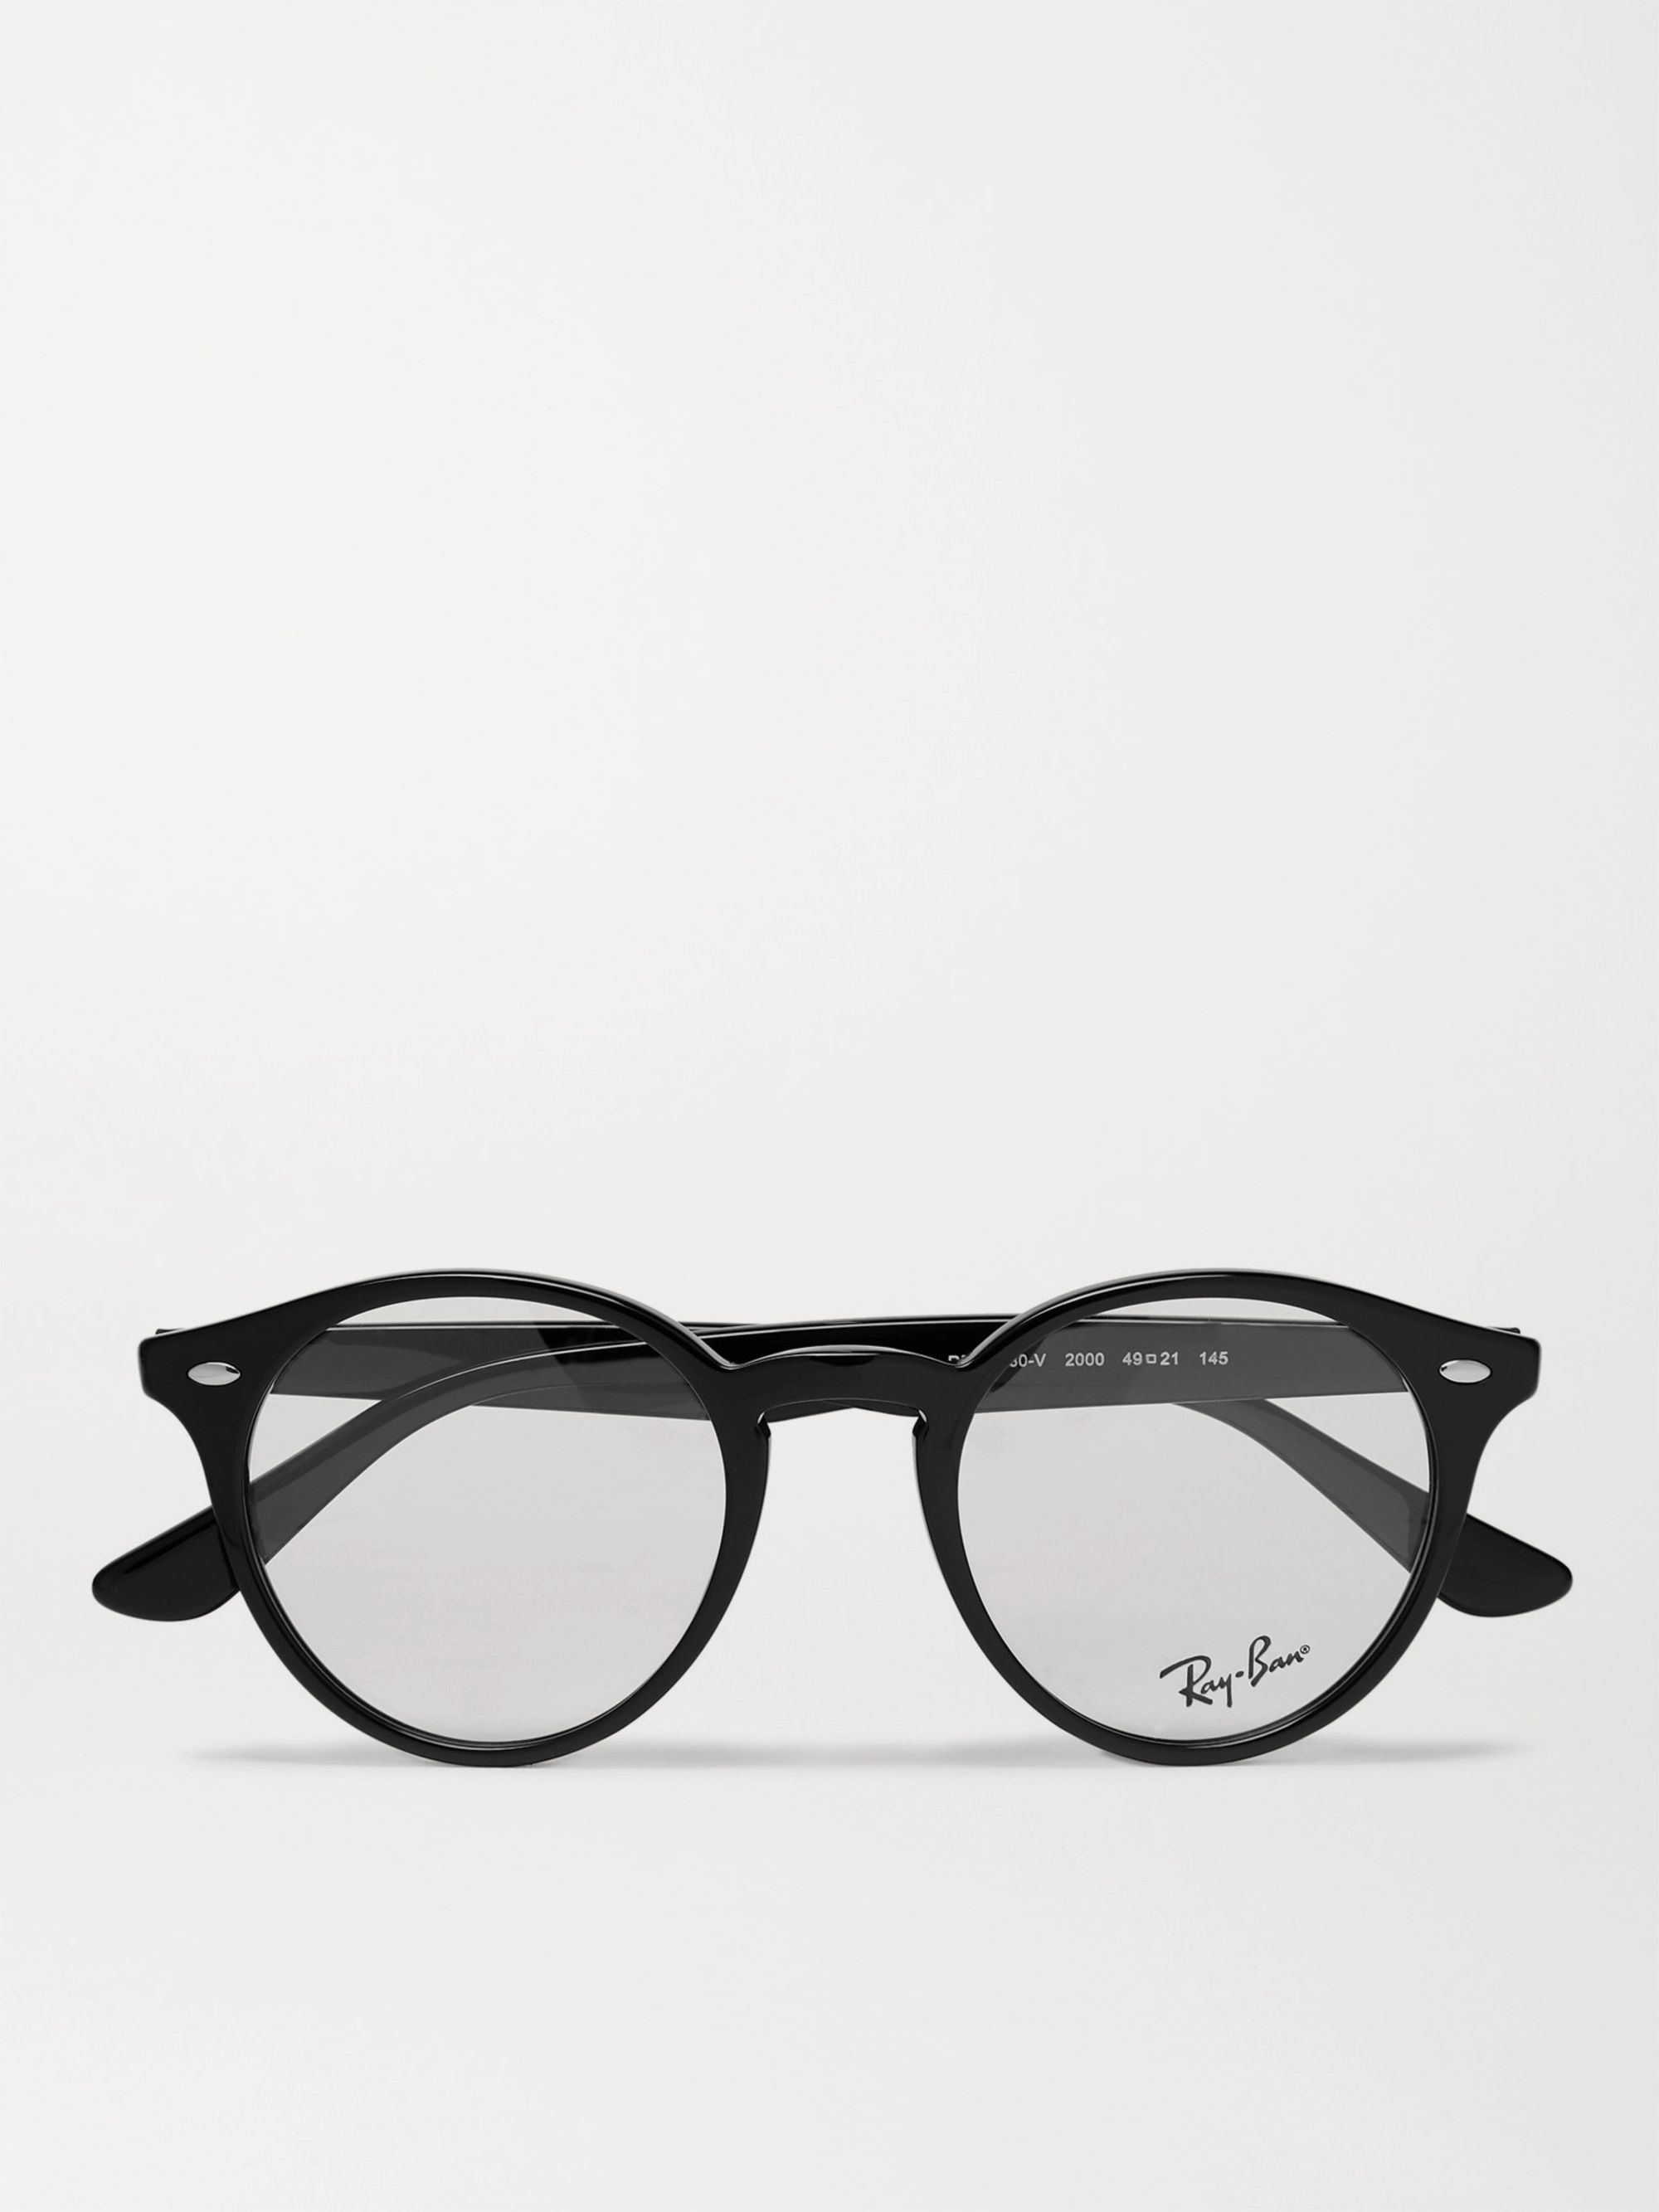 Black Round Frame Acetate Optical Glasses Ray Ban Mr Porter